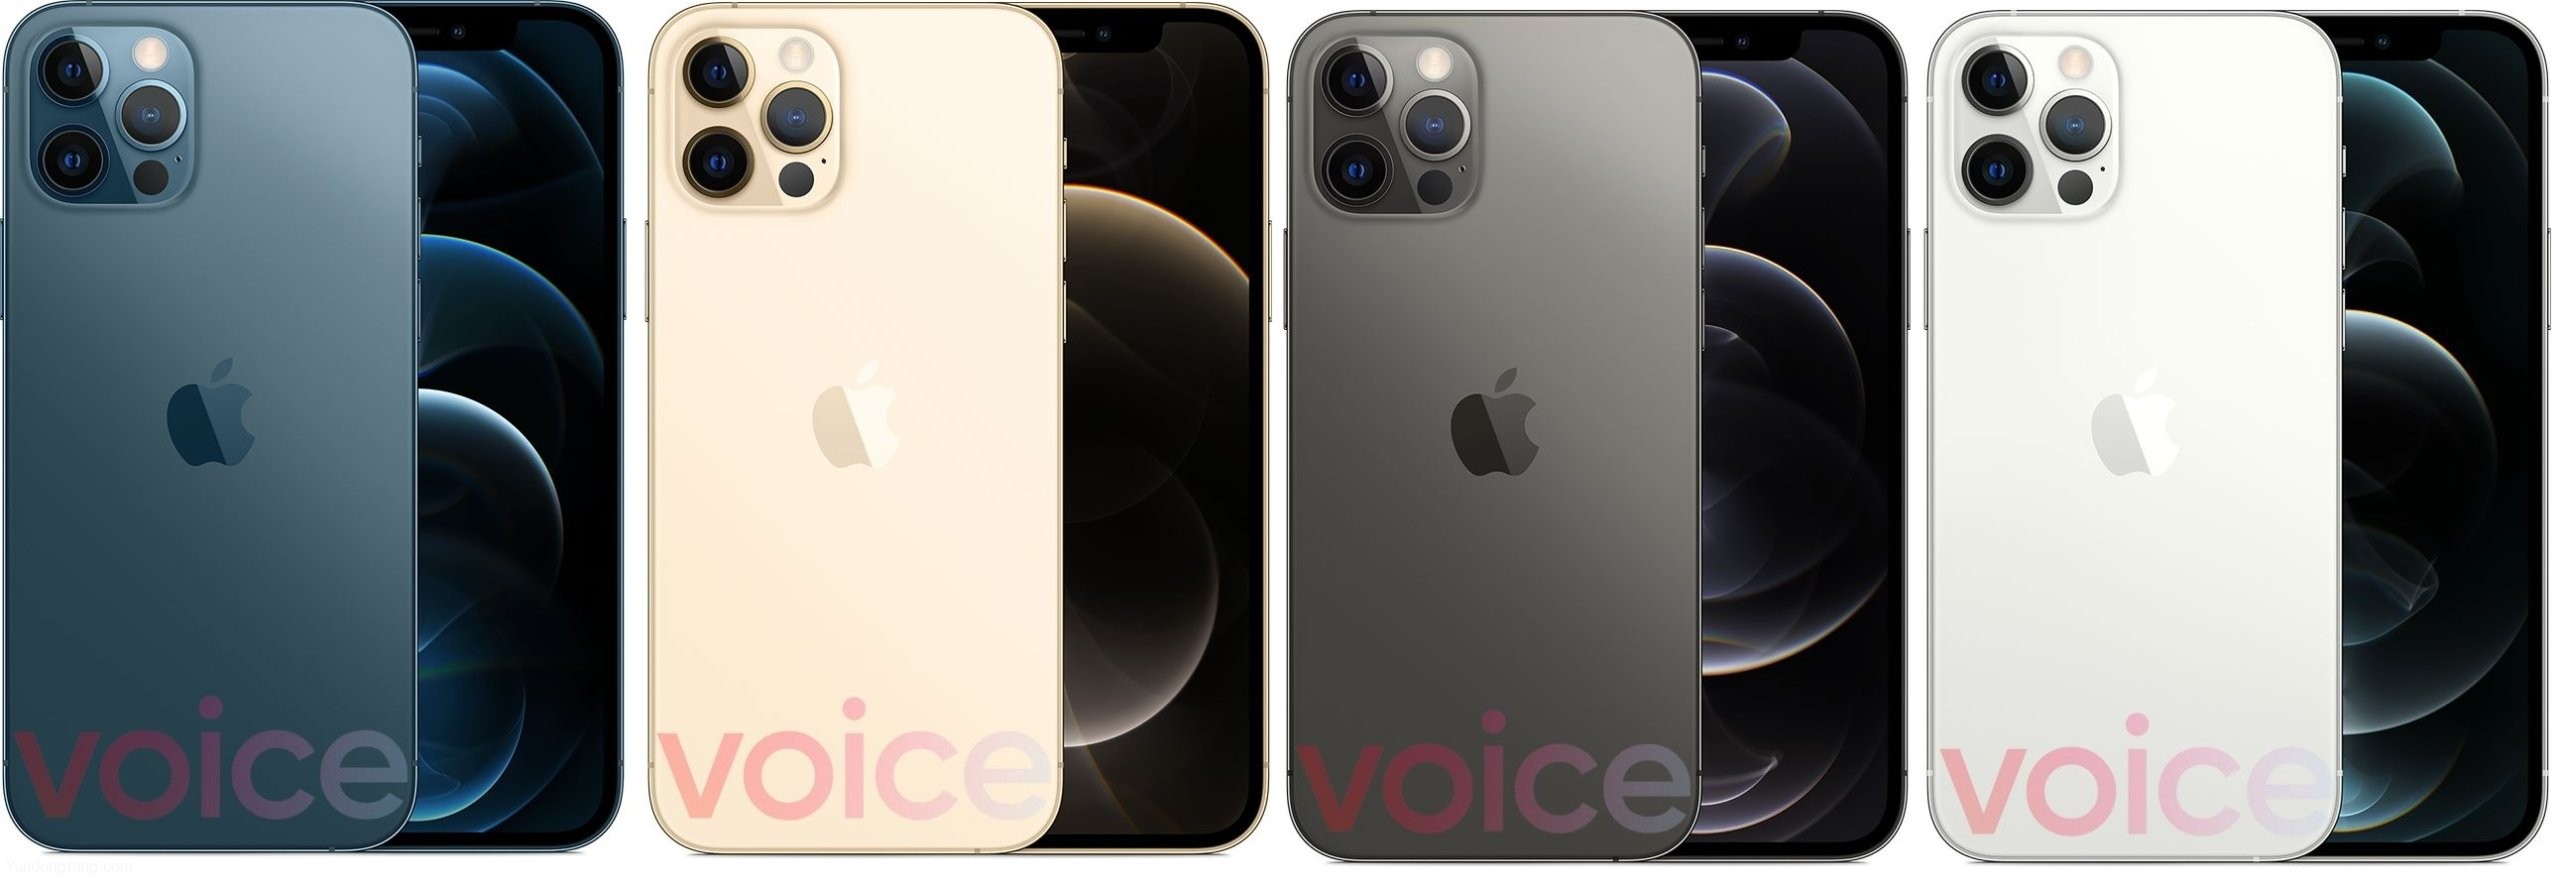 Apple-iPhone-12-Pro-scaled-3